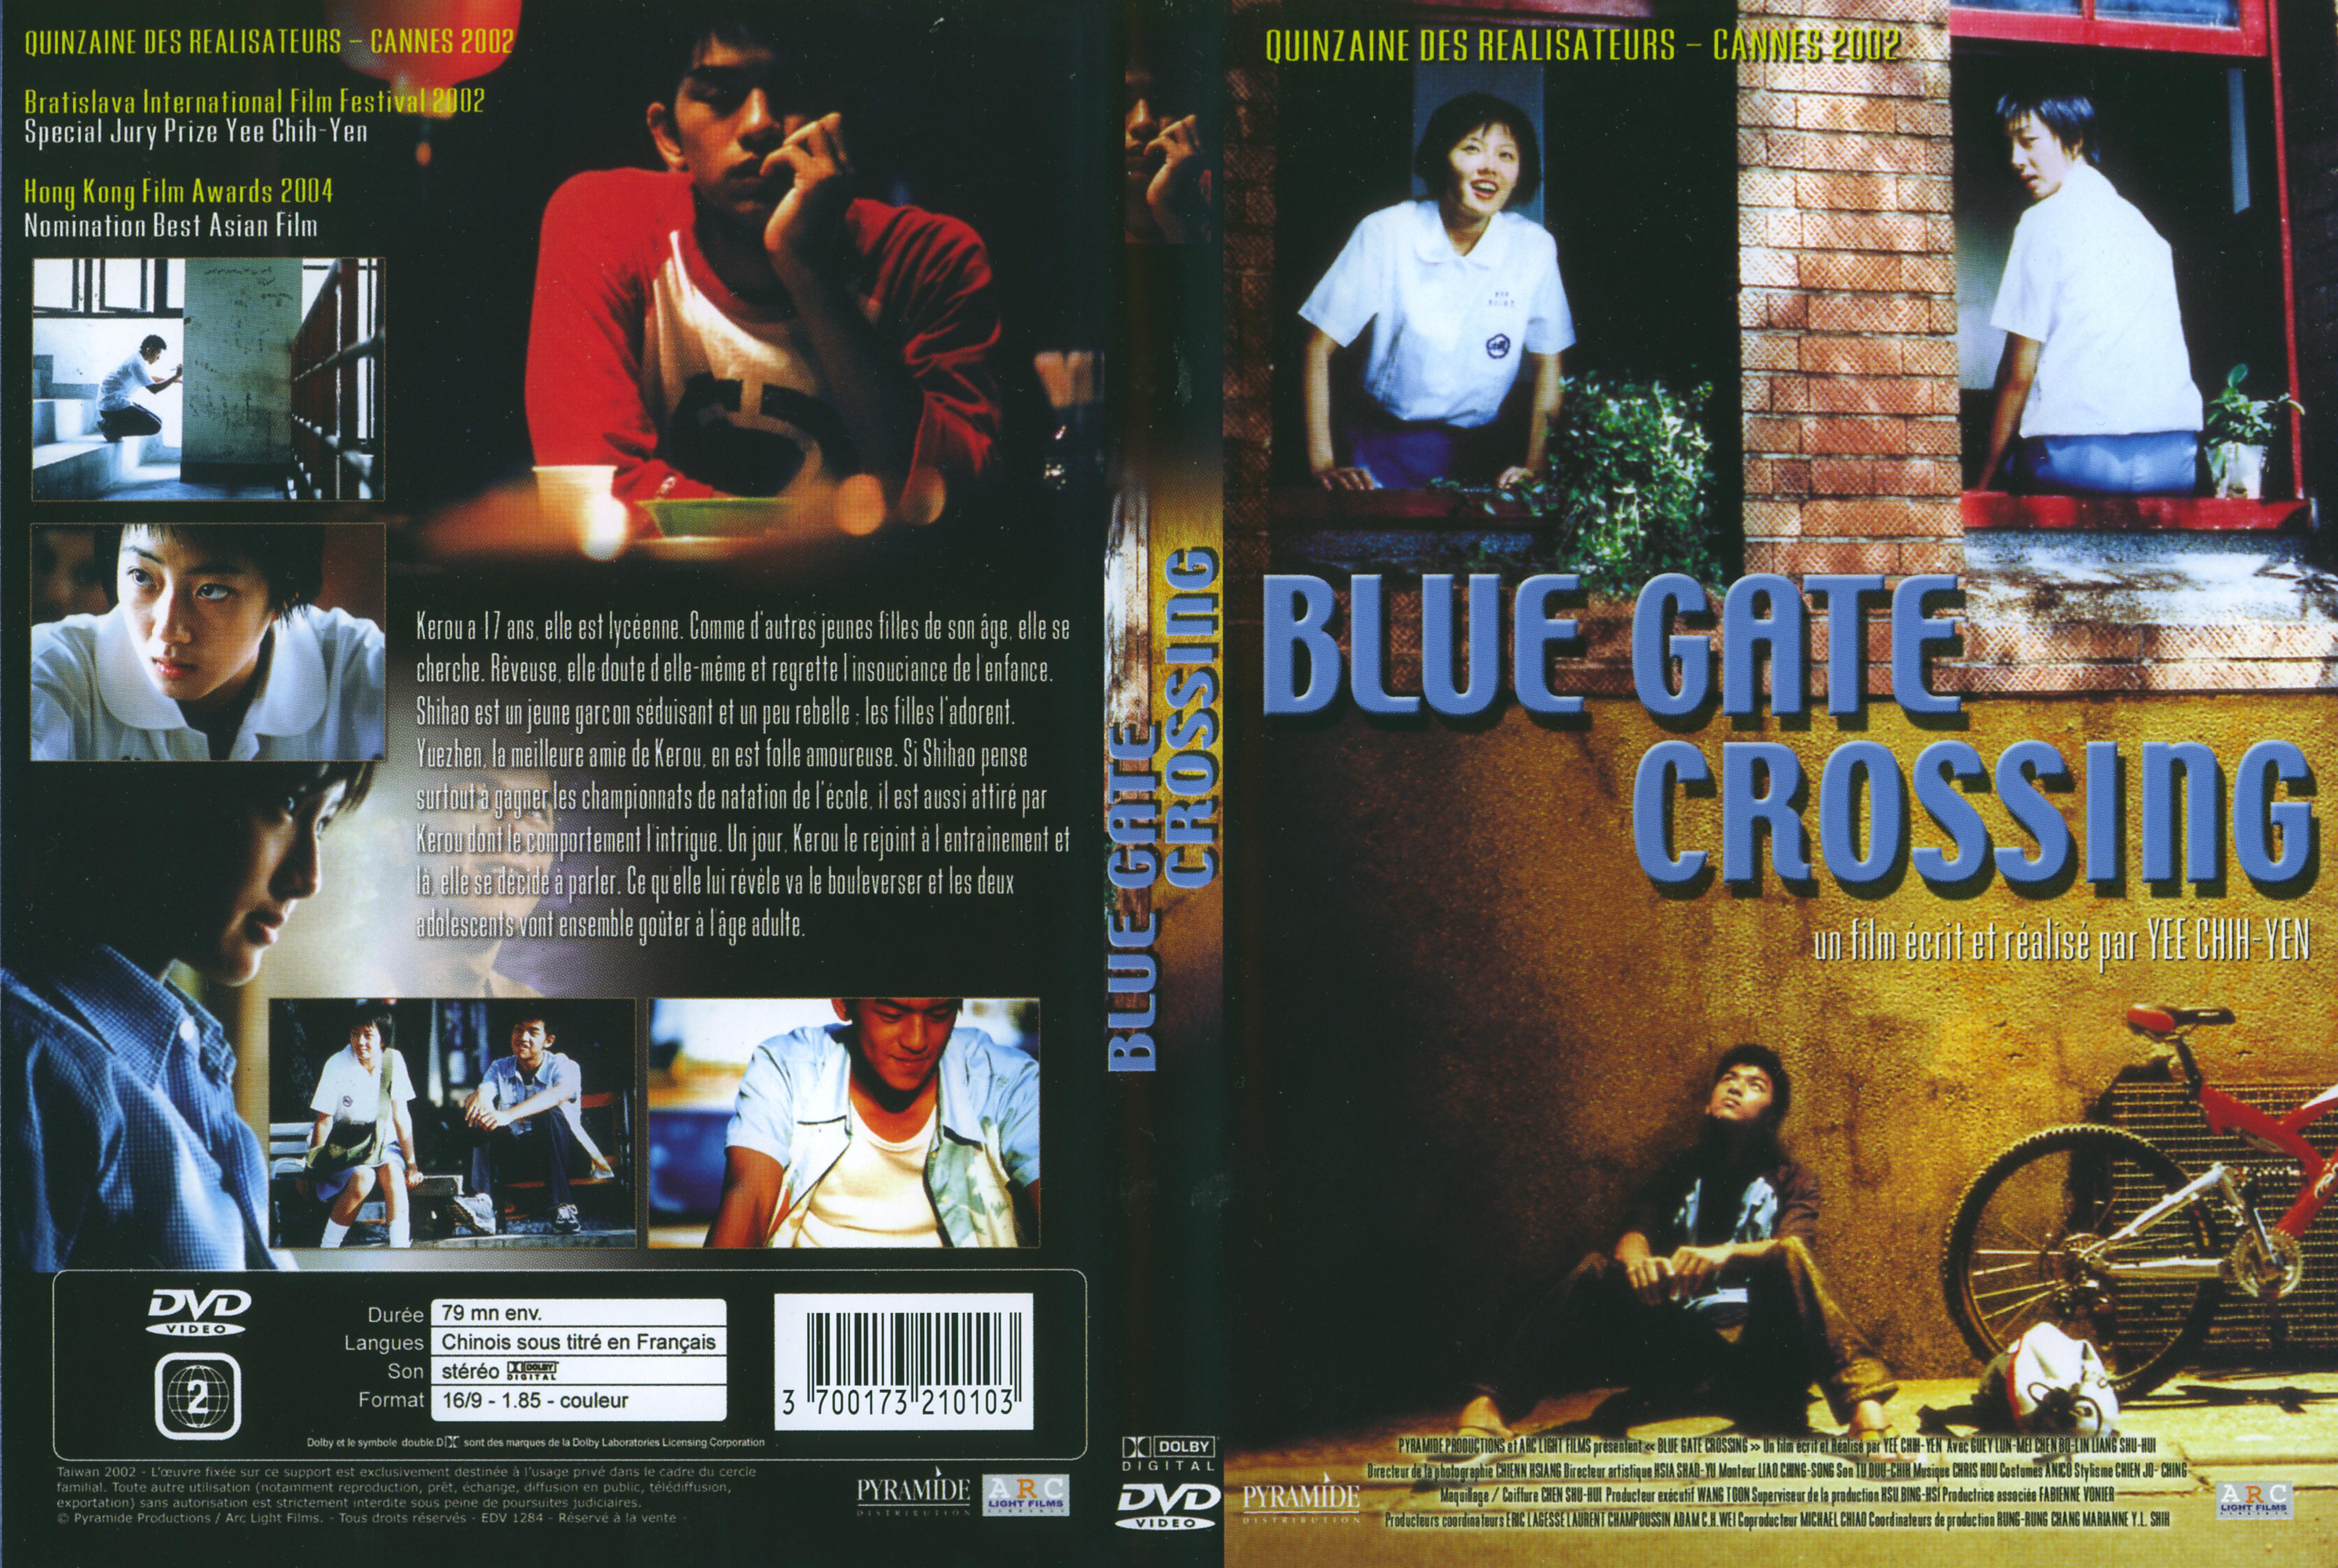 Jaquette DVD Blue gate crossing